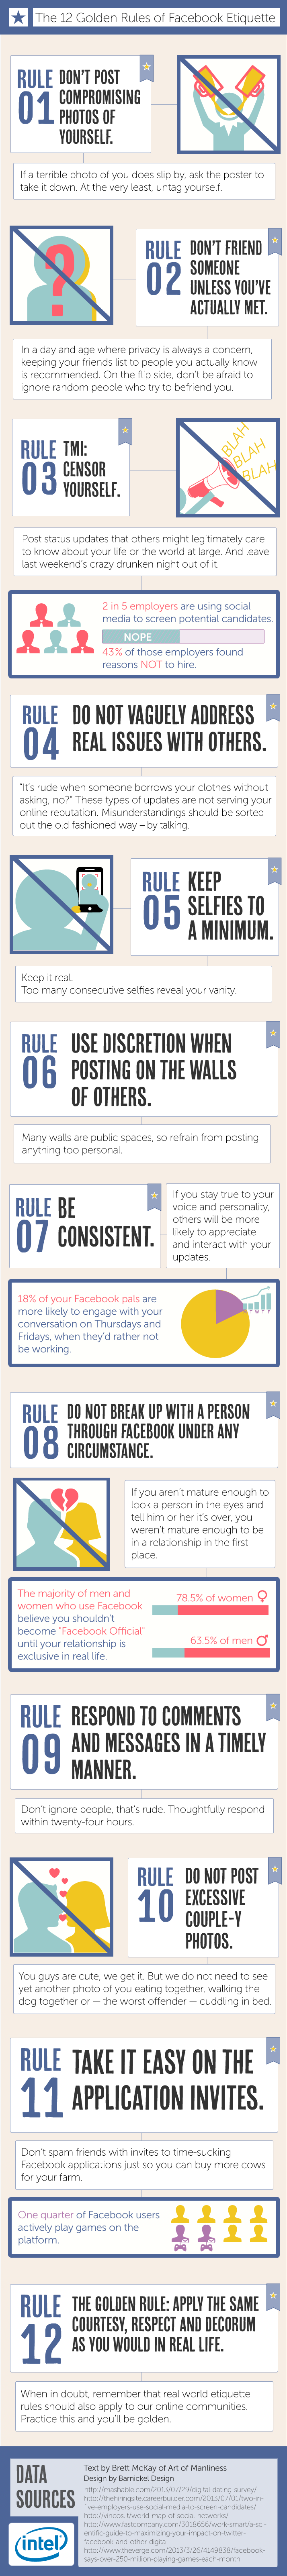 12 Golden Rules of Facebook Etiquette Infographic